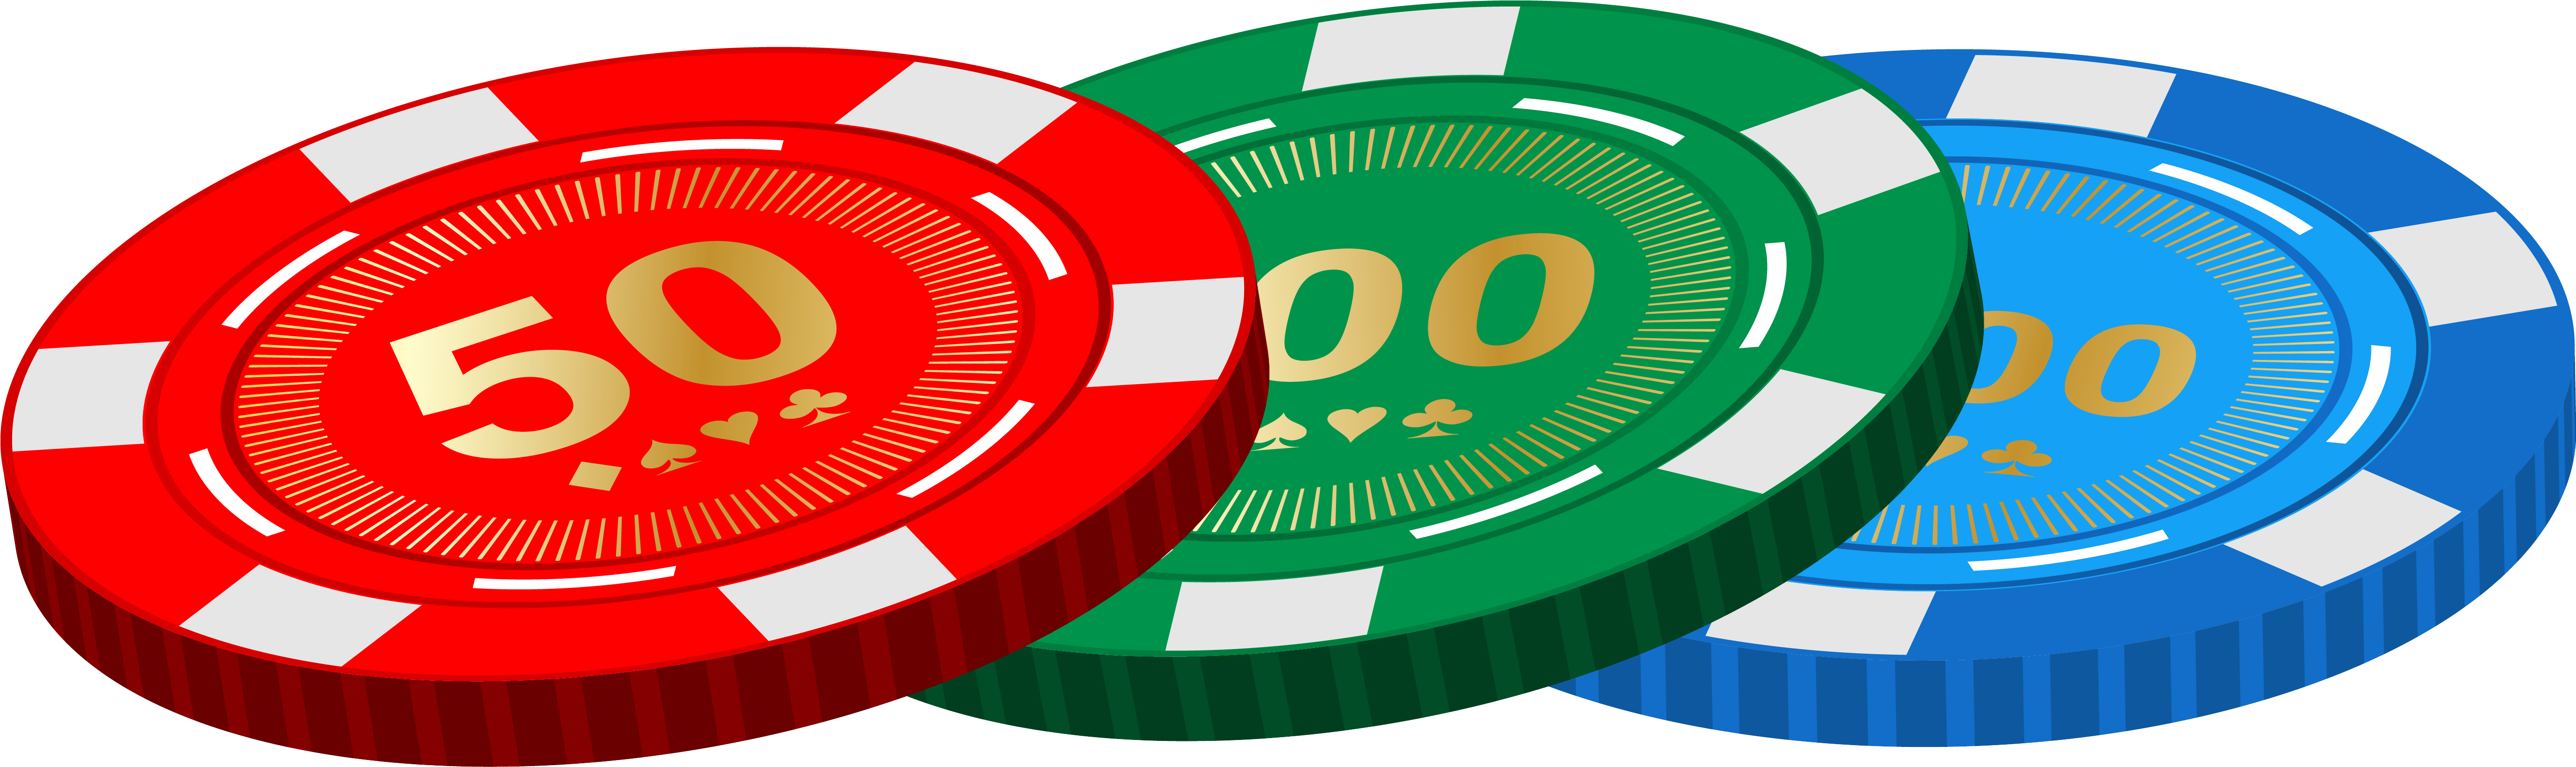 Casino Card Poker Chips - Casino Token (5611x1812)